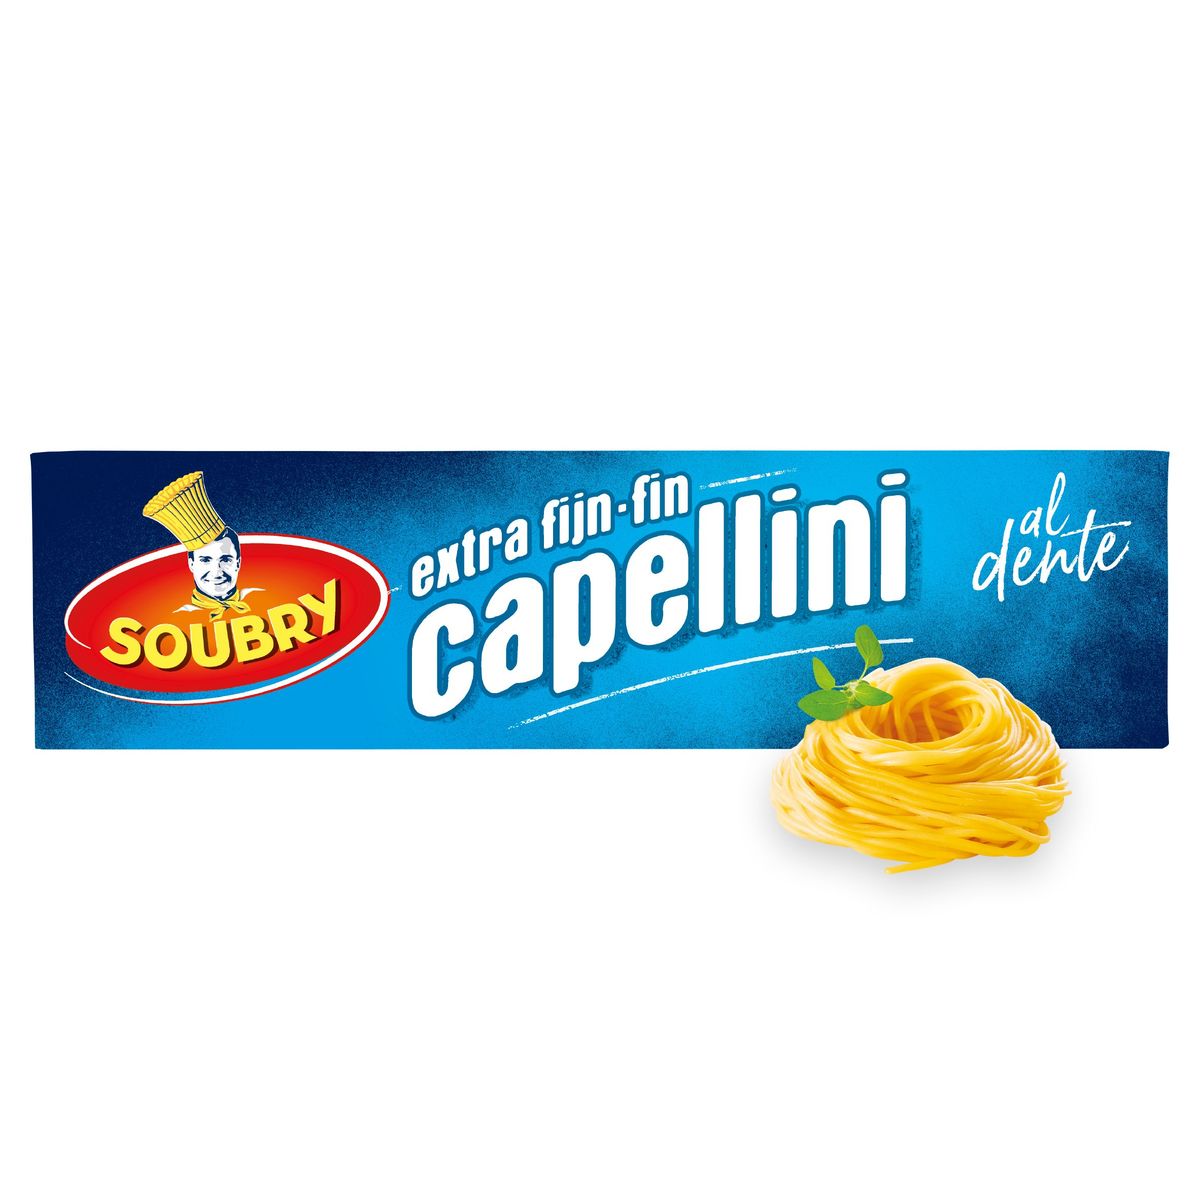 Soubry Pâtes Capellini extra fin 375g